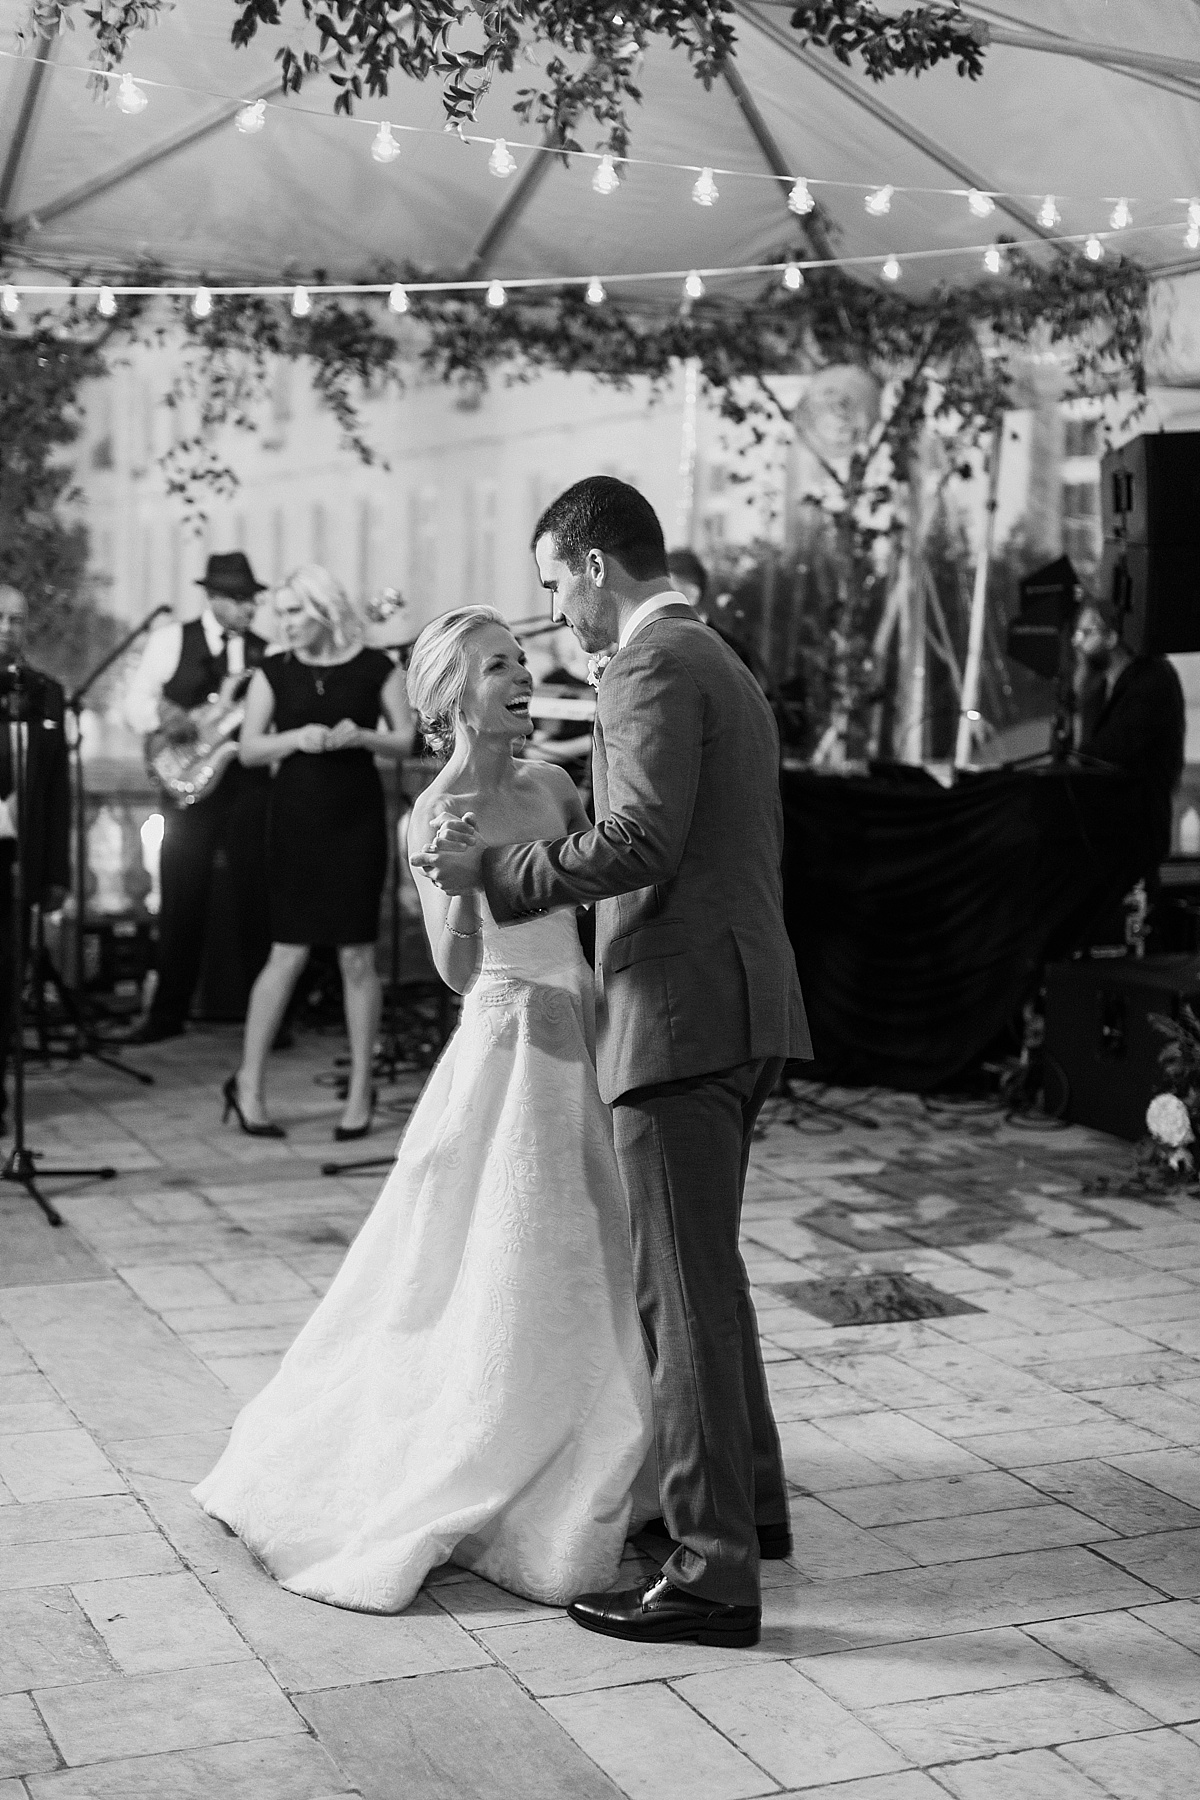 Heartfelt, joyful DC wedding DAR | Photograph by Abby Grace 